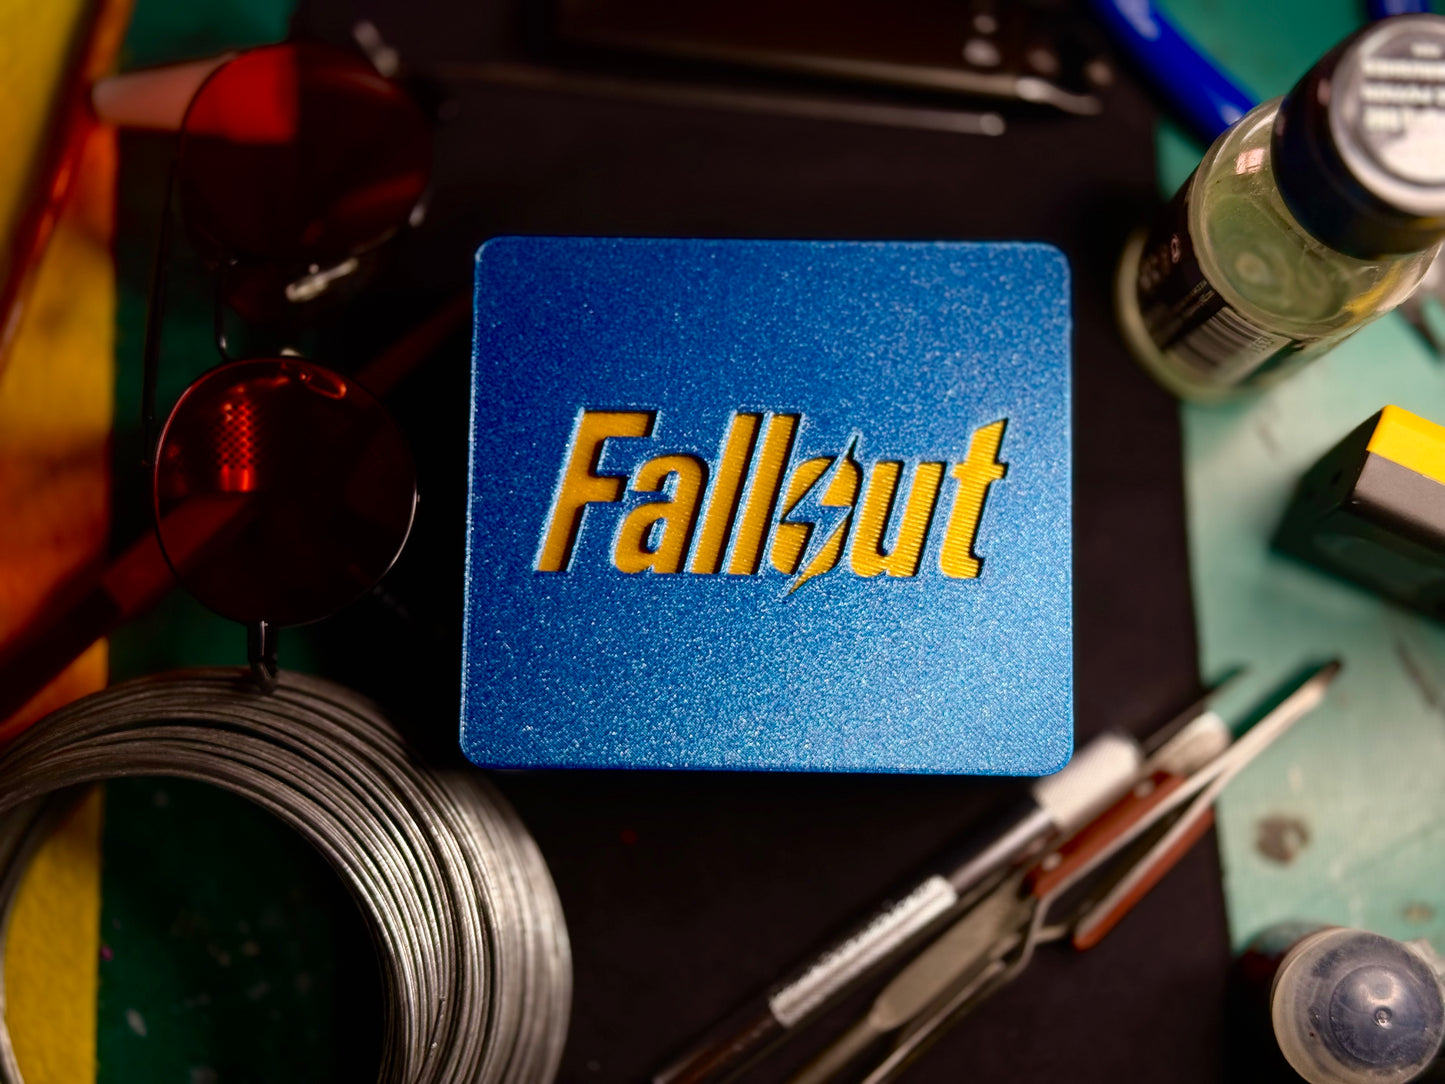 Caja Fallout imantada Premium.